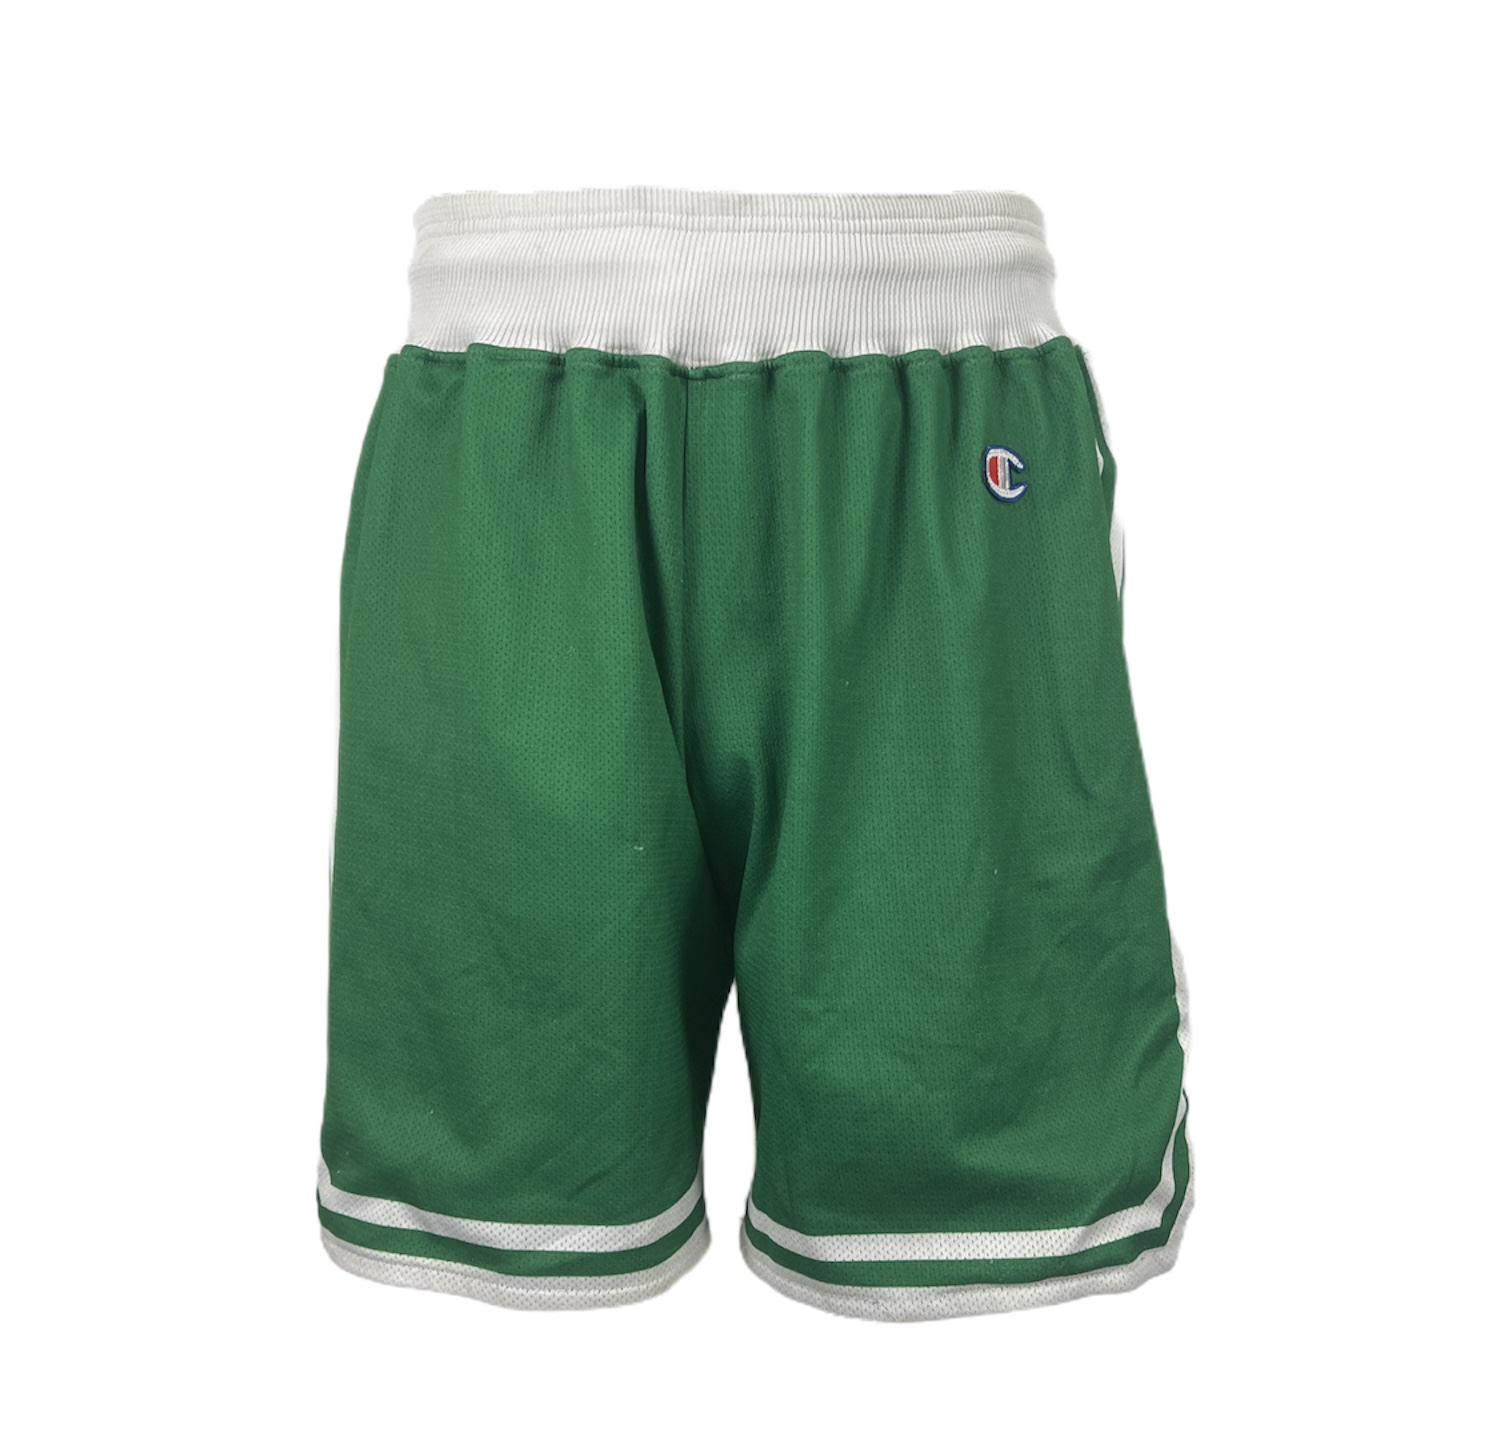 Pantaloncini sportivi vintage verdi e bianchi champion